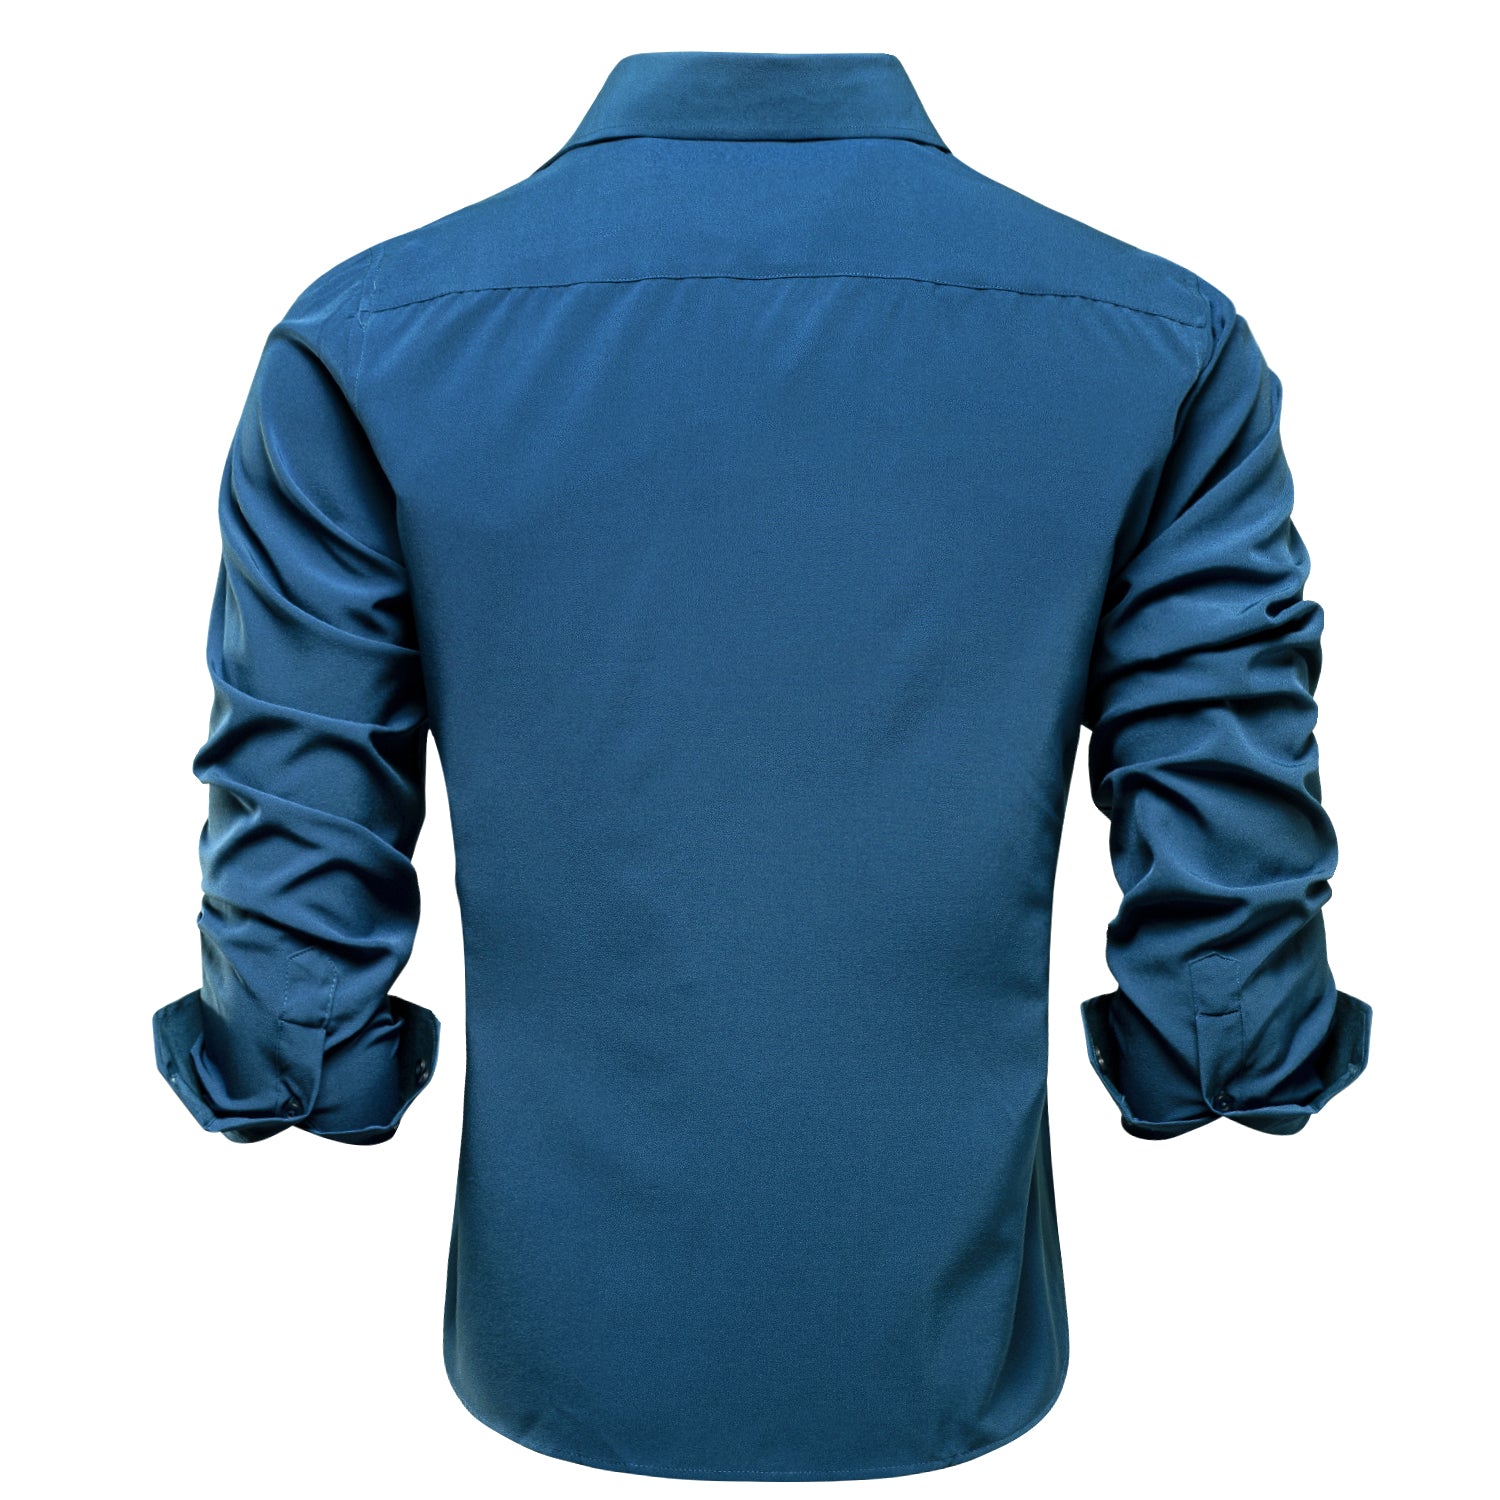 Denim Blue Solid Stretch Men's Long Sleeve Shirt